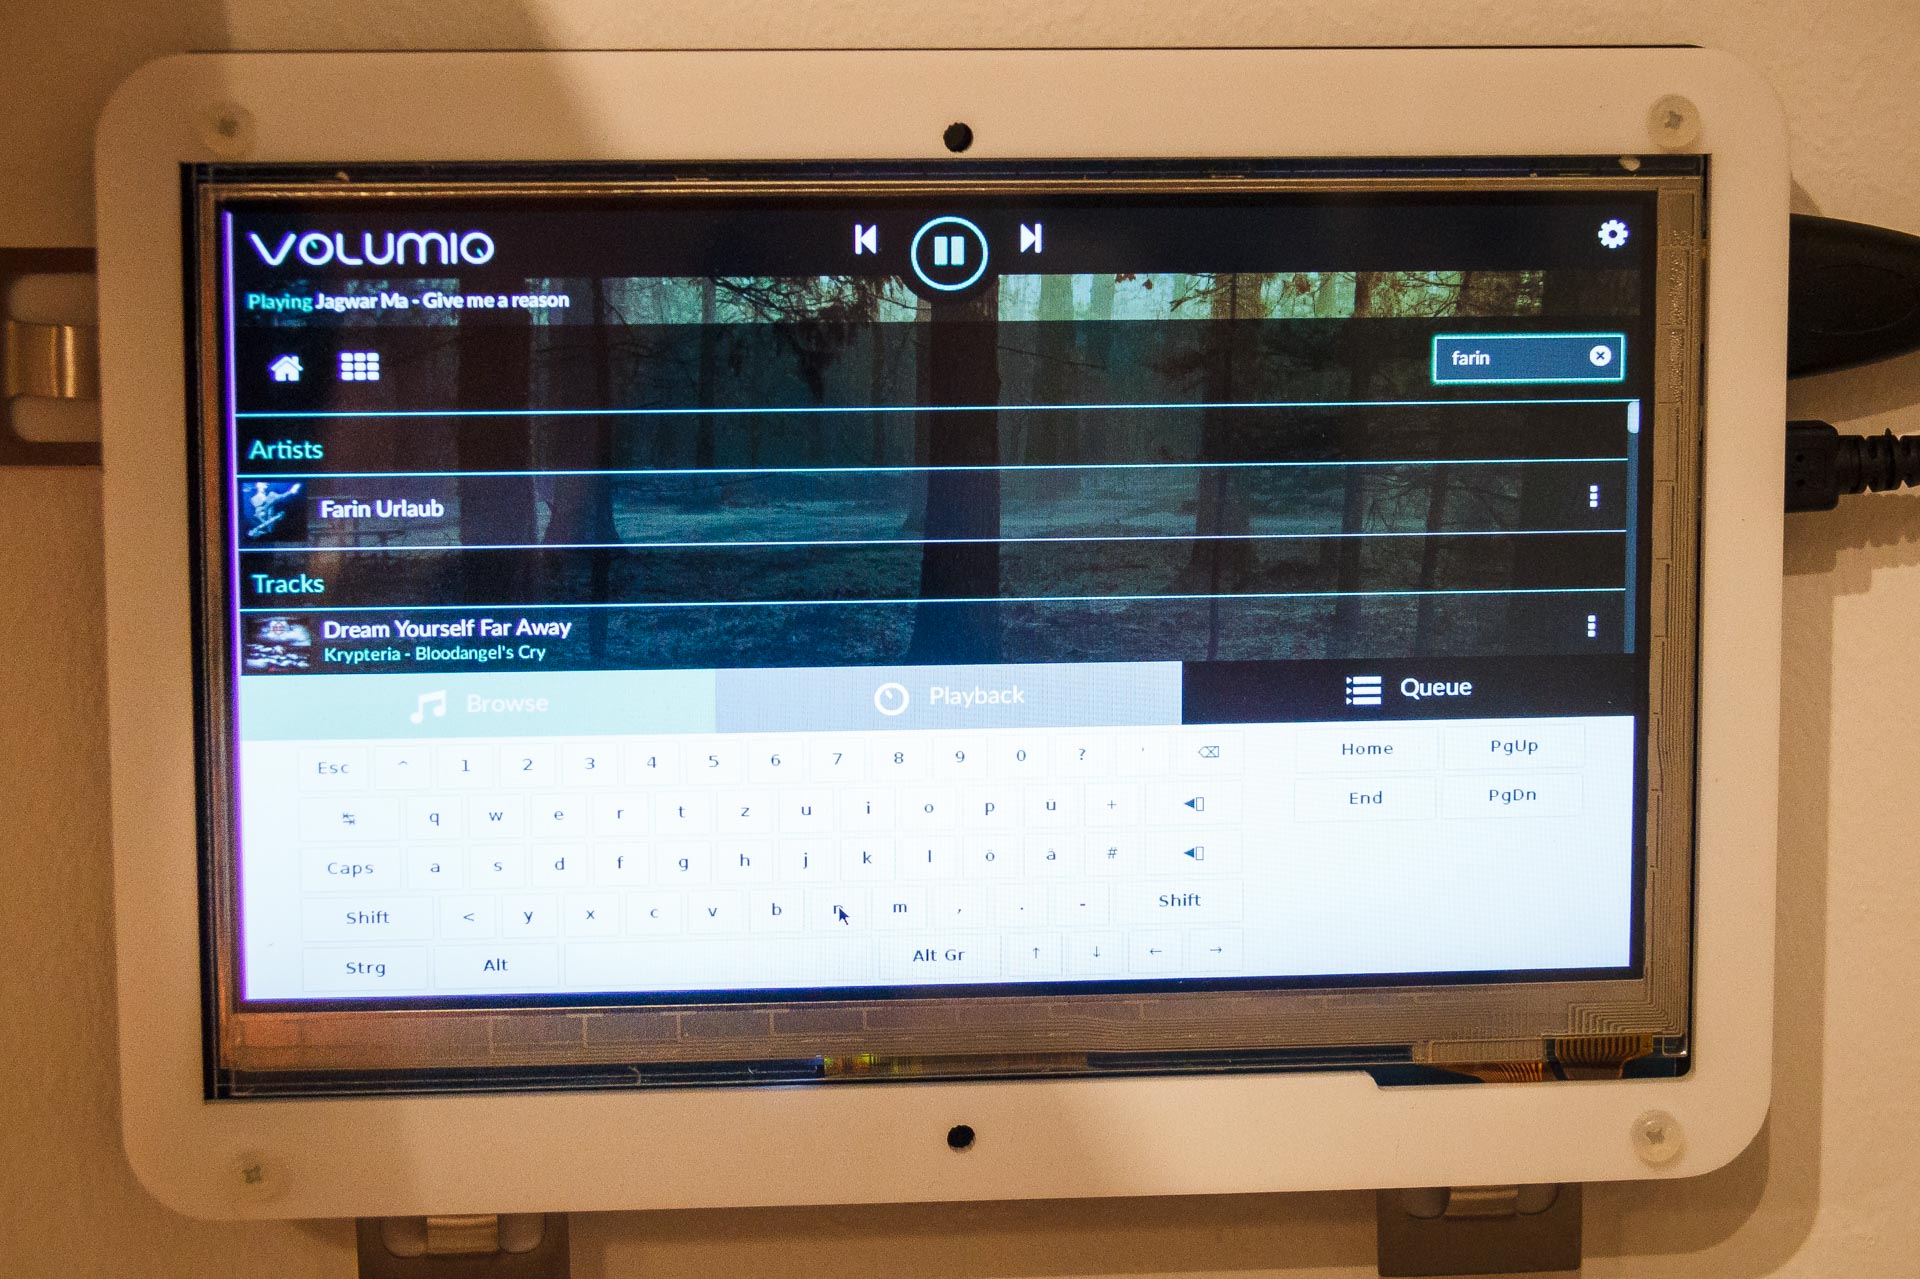 Volumio running in kiosk mode using the matchbox on-screen keyboard.